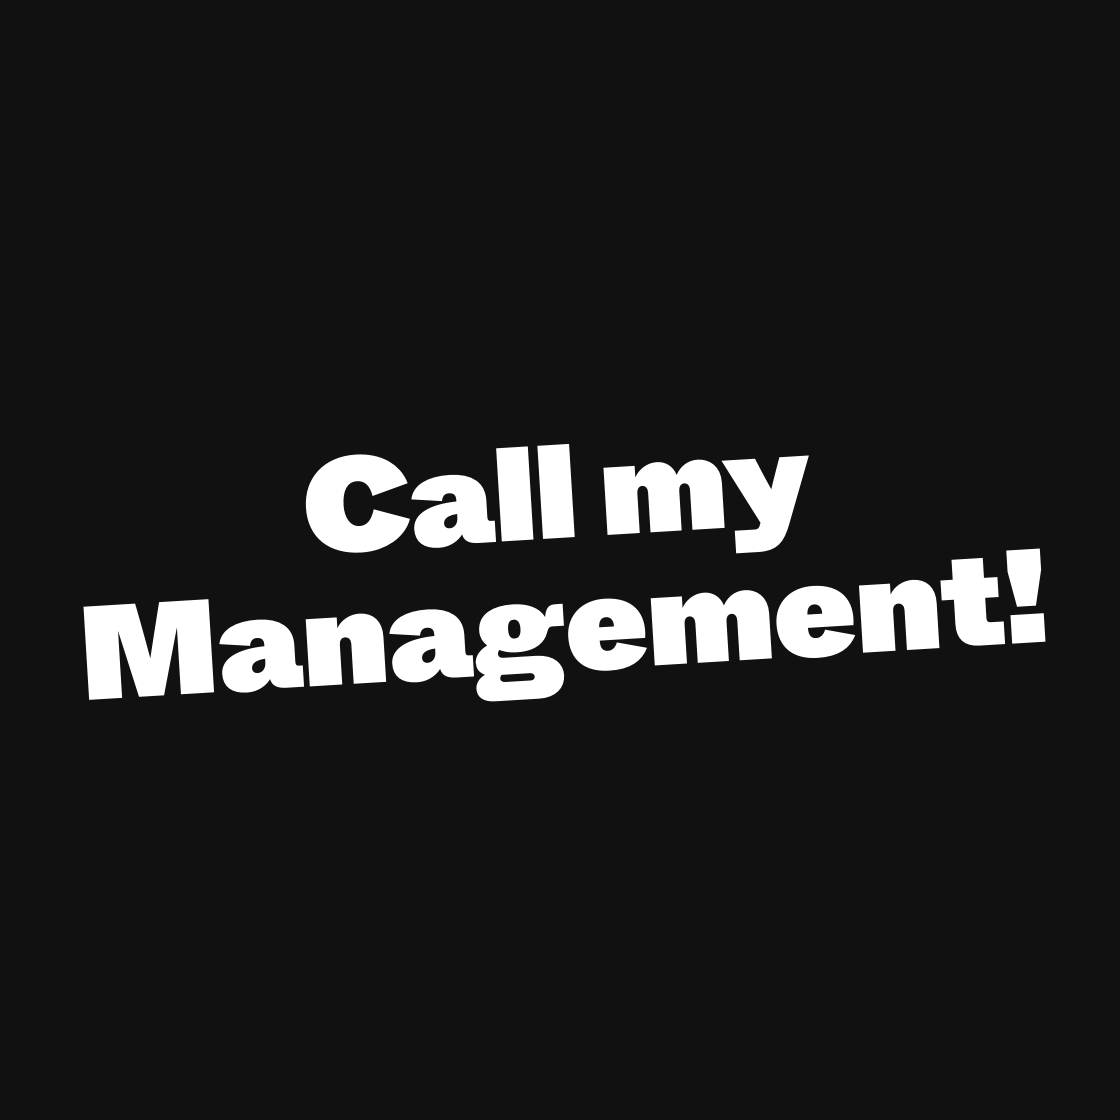 Call my Management!